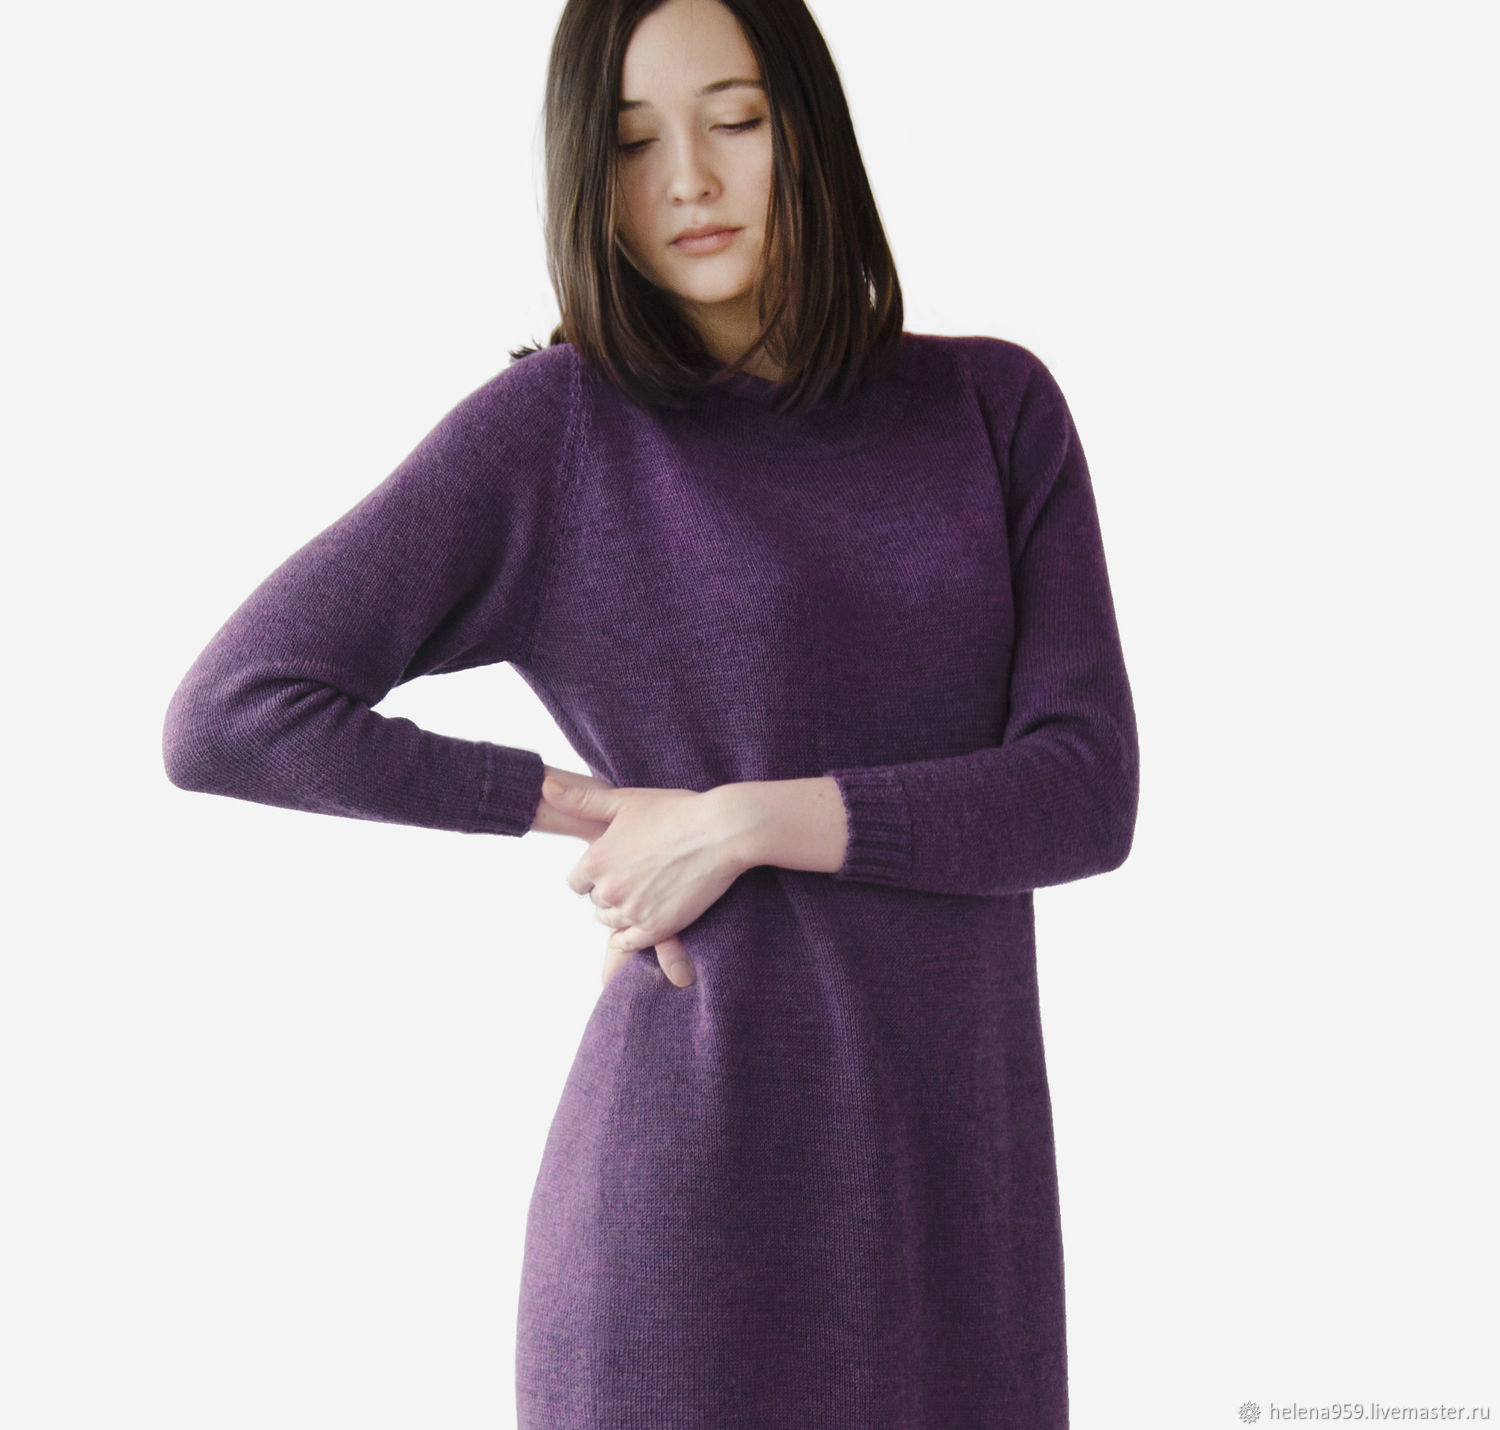 Dress knitted from Merino wool, Dresses, Ulyanovsk,  Фото №1